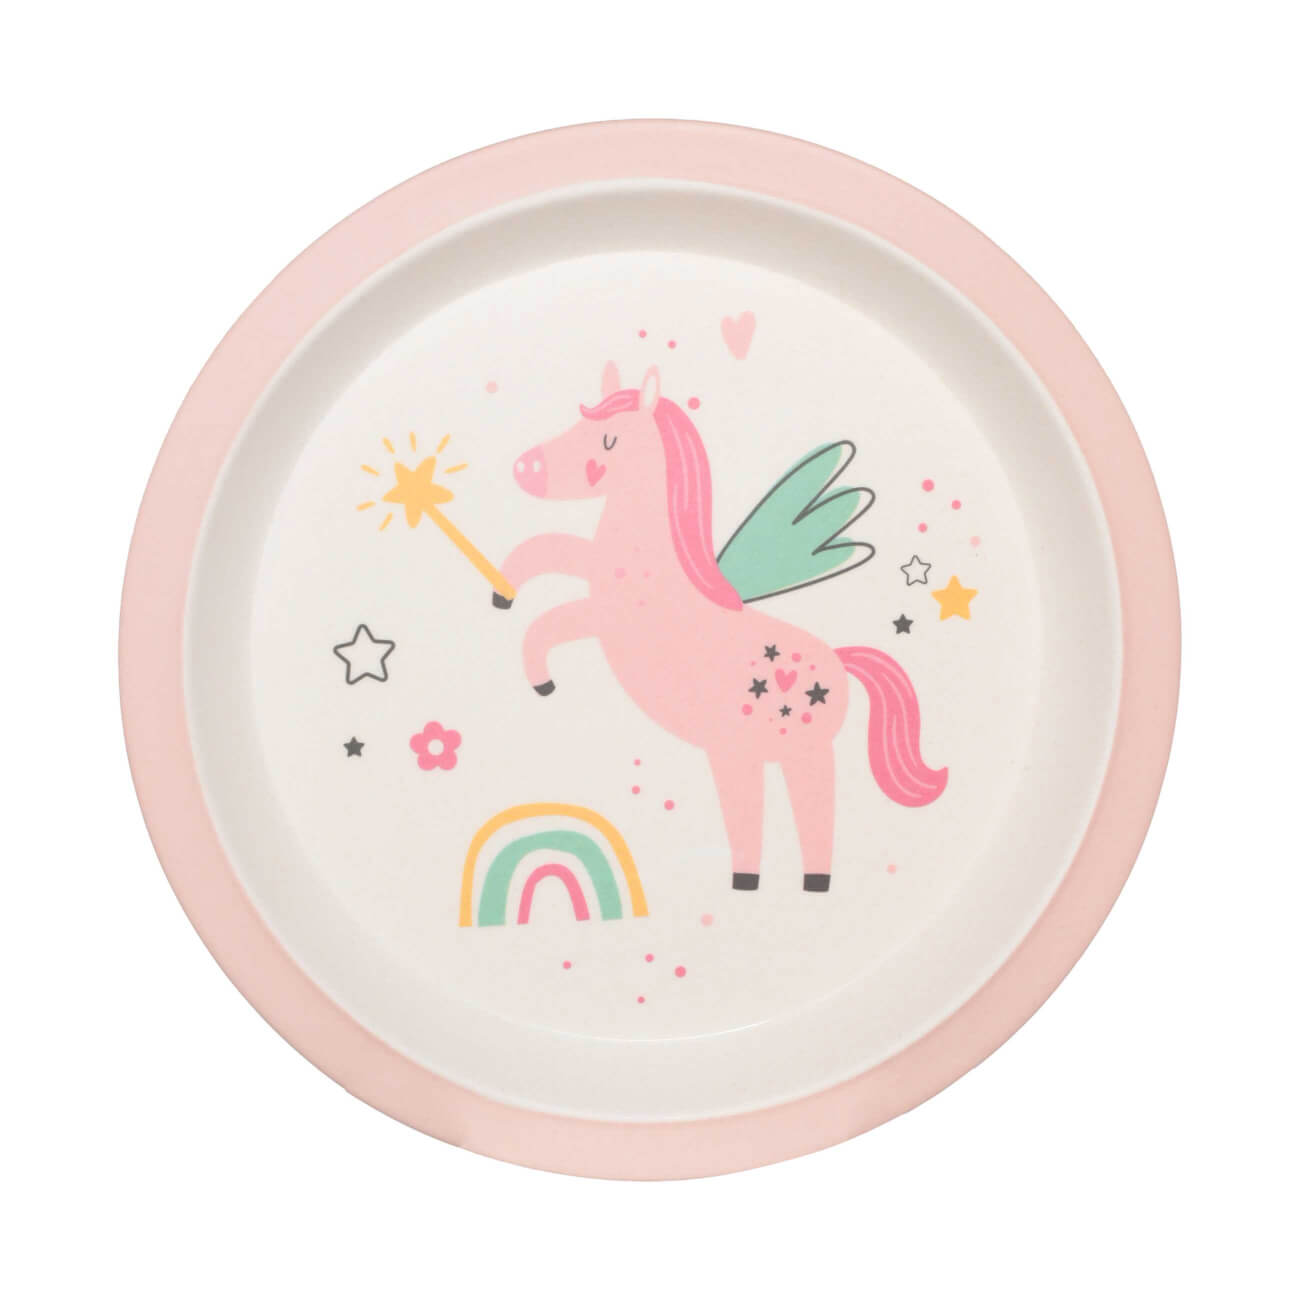 Тарелка закусочная, детская, 21 см, бамбук, розовая, Единорог и радуга, Unicorn тарелка закусочная детская 21 см бамбук розовая единорог и радуга unicorn